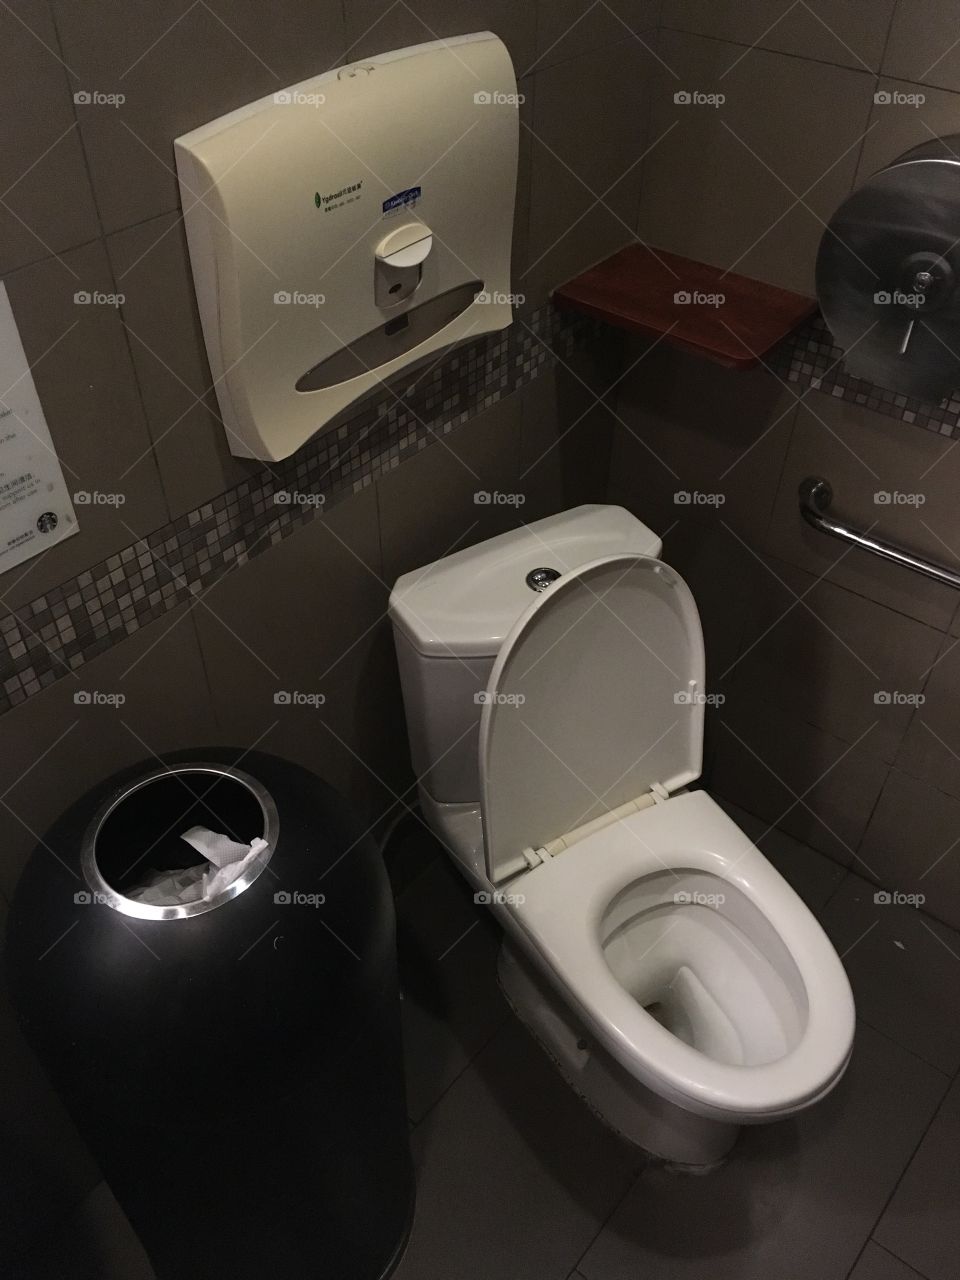 A toilet at Starbucks